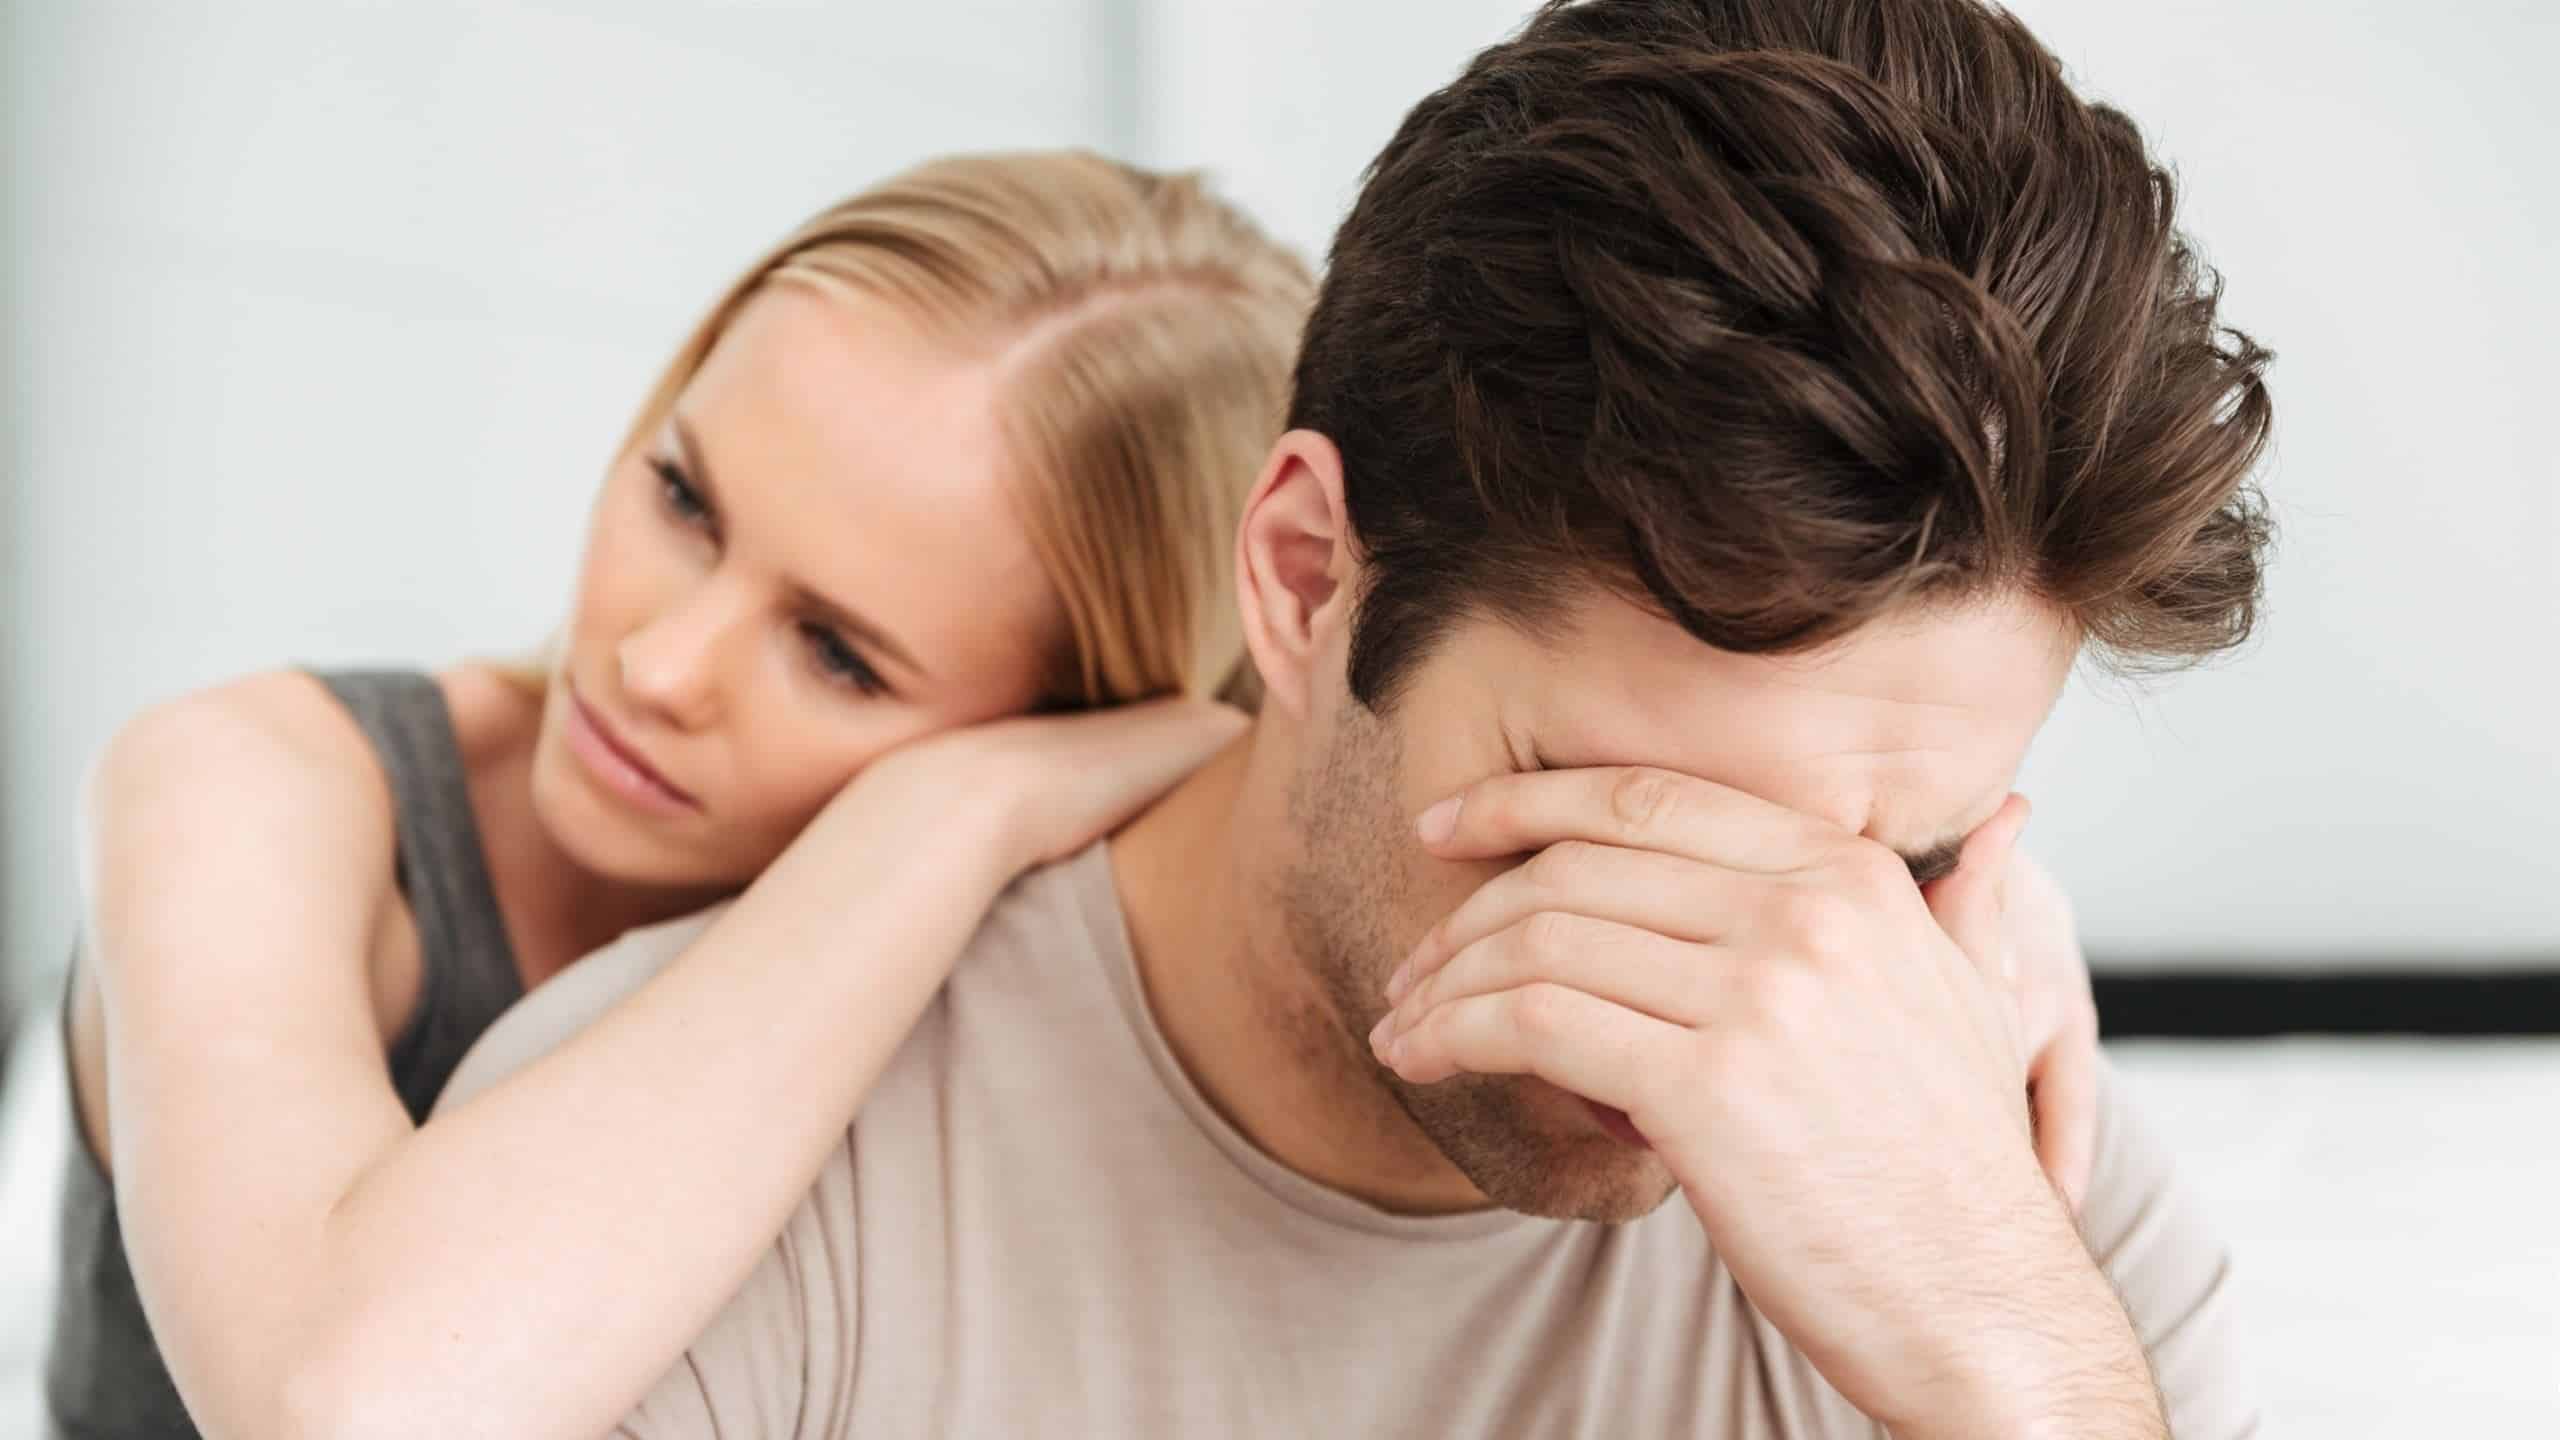 A sad man crying while his girlfriend comforts him.